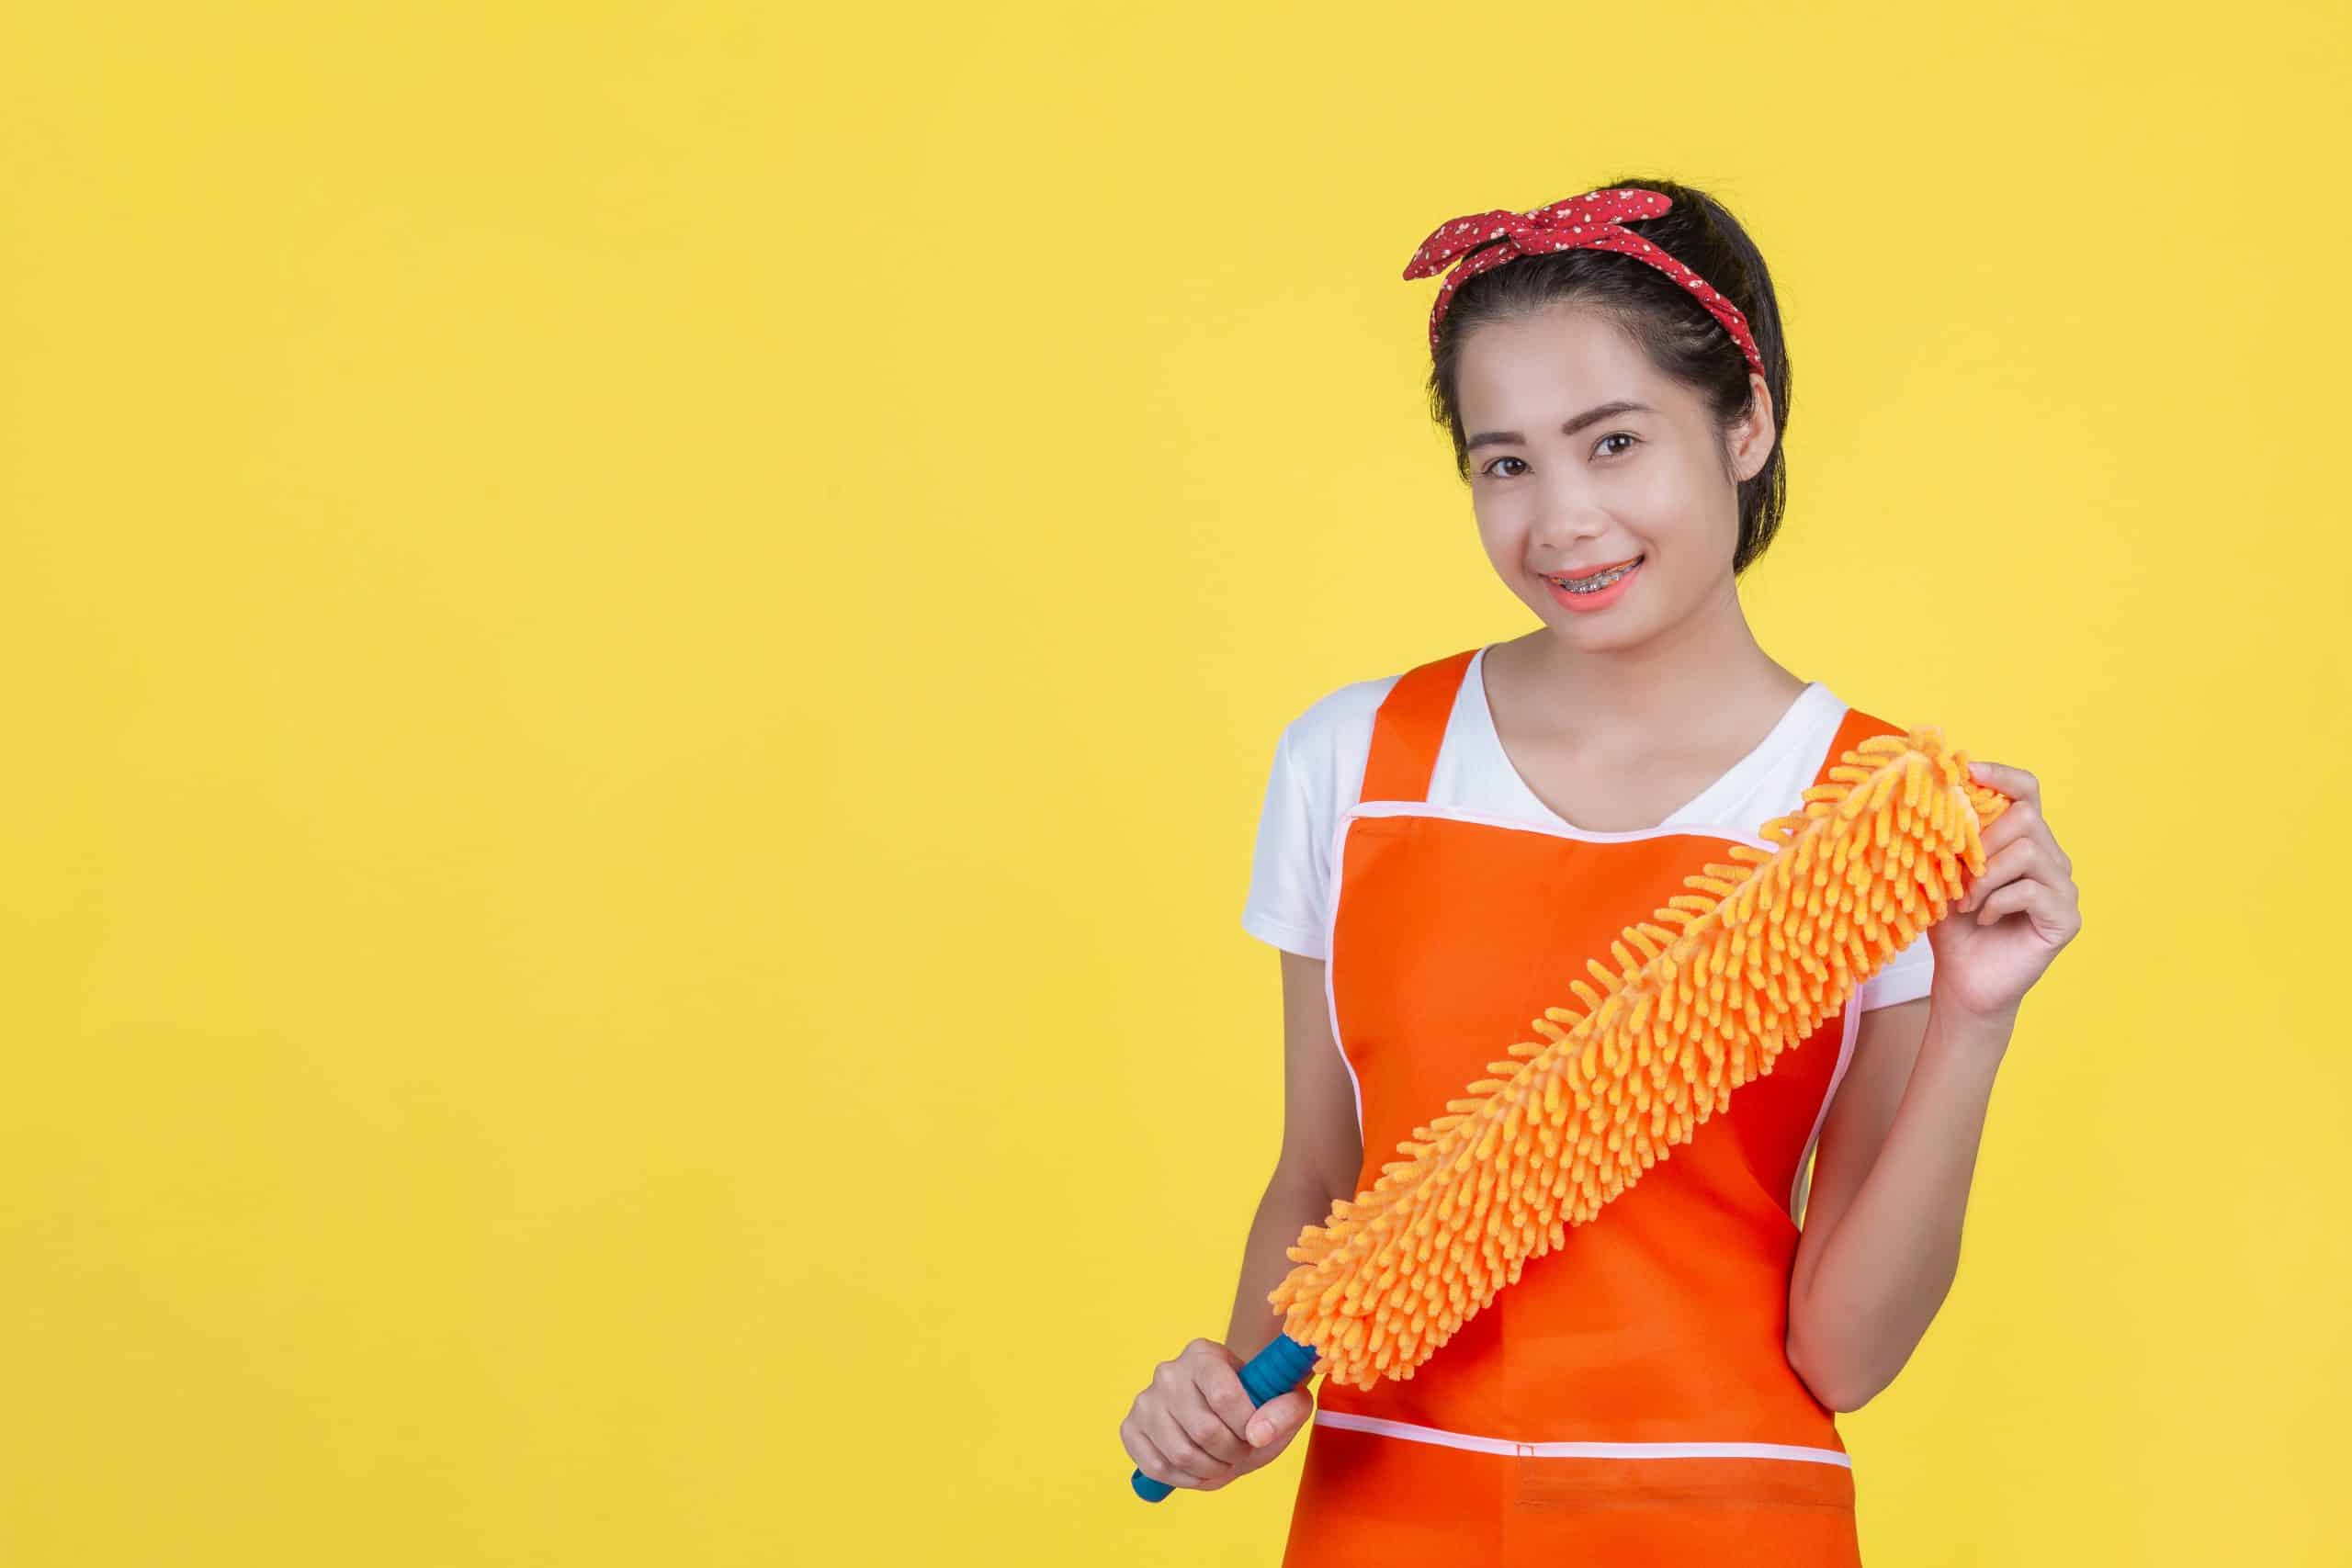 indonesian helper holding an orange window wiper